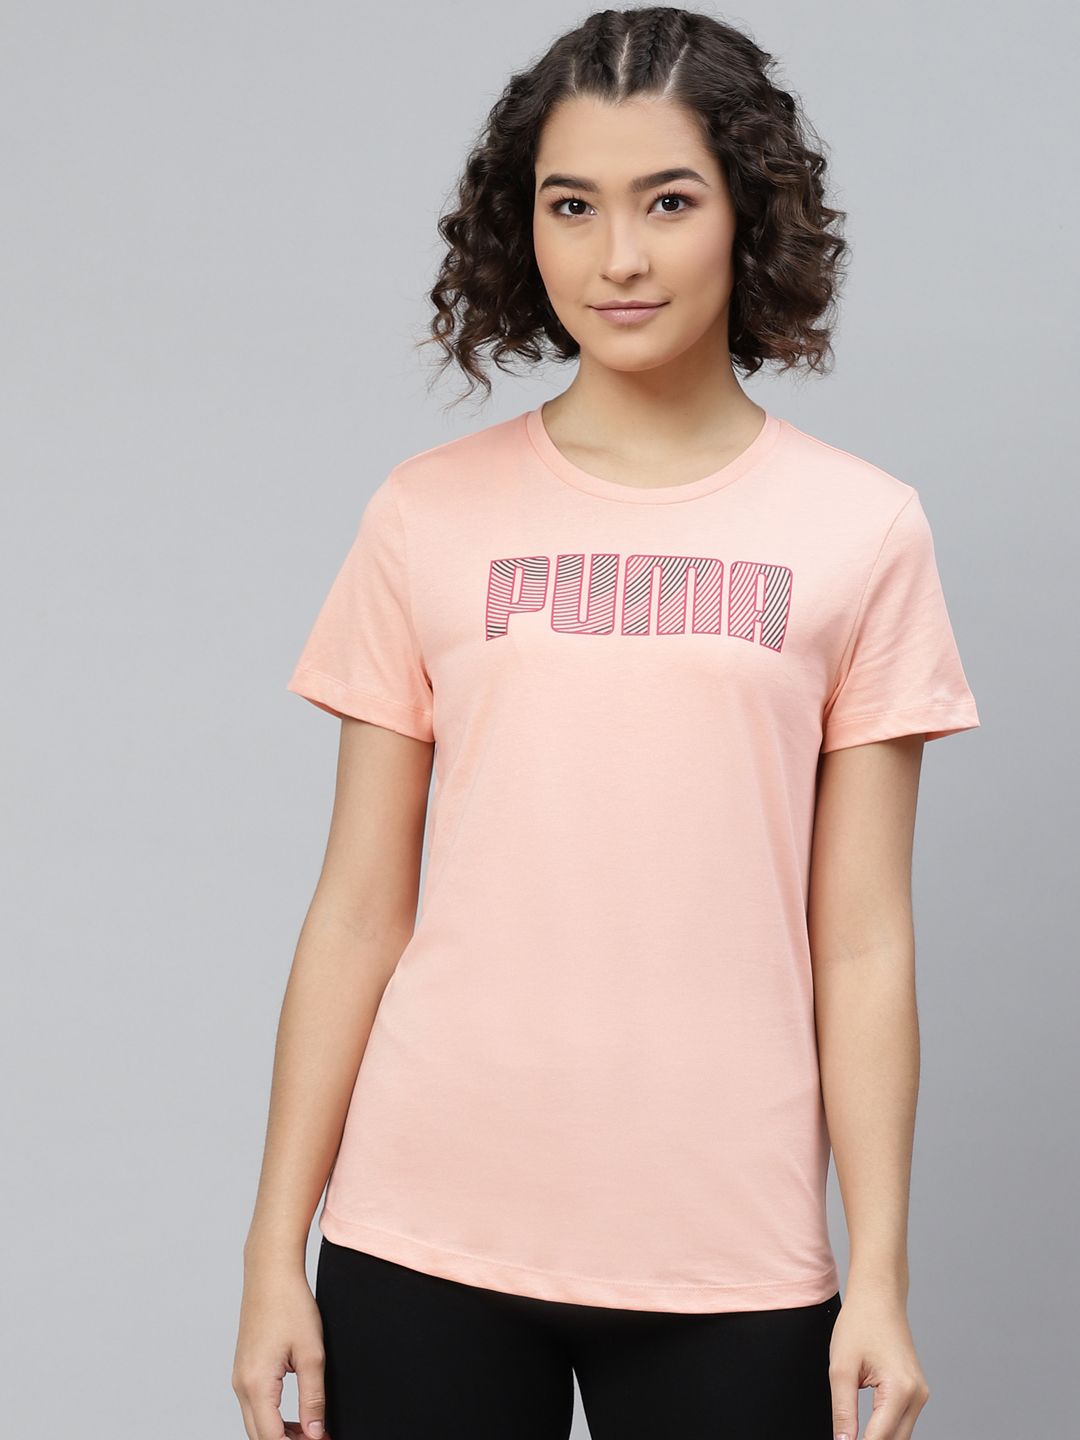 Puma Women Peach-Coloured Printed Round Neck Pure Cotton T-shirt Price in India